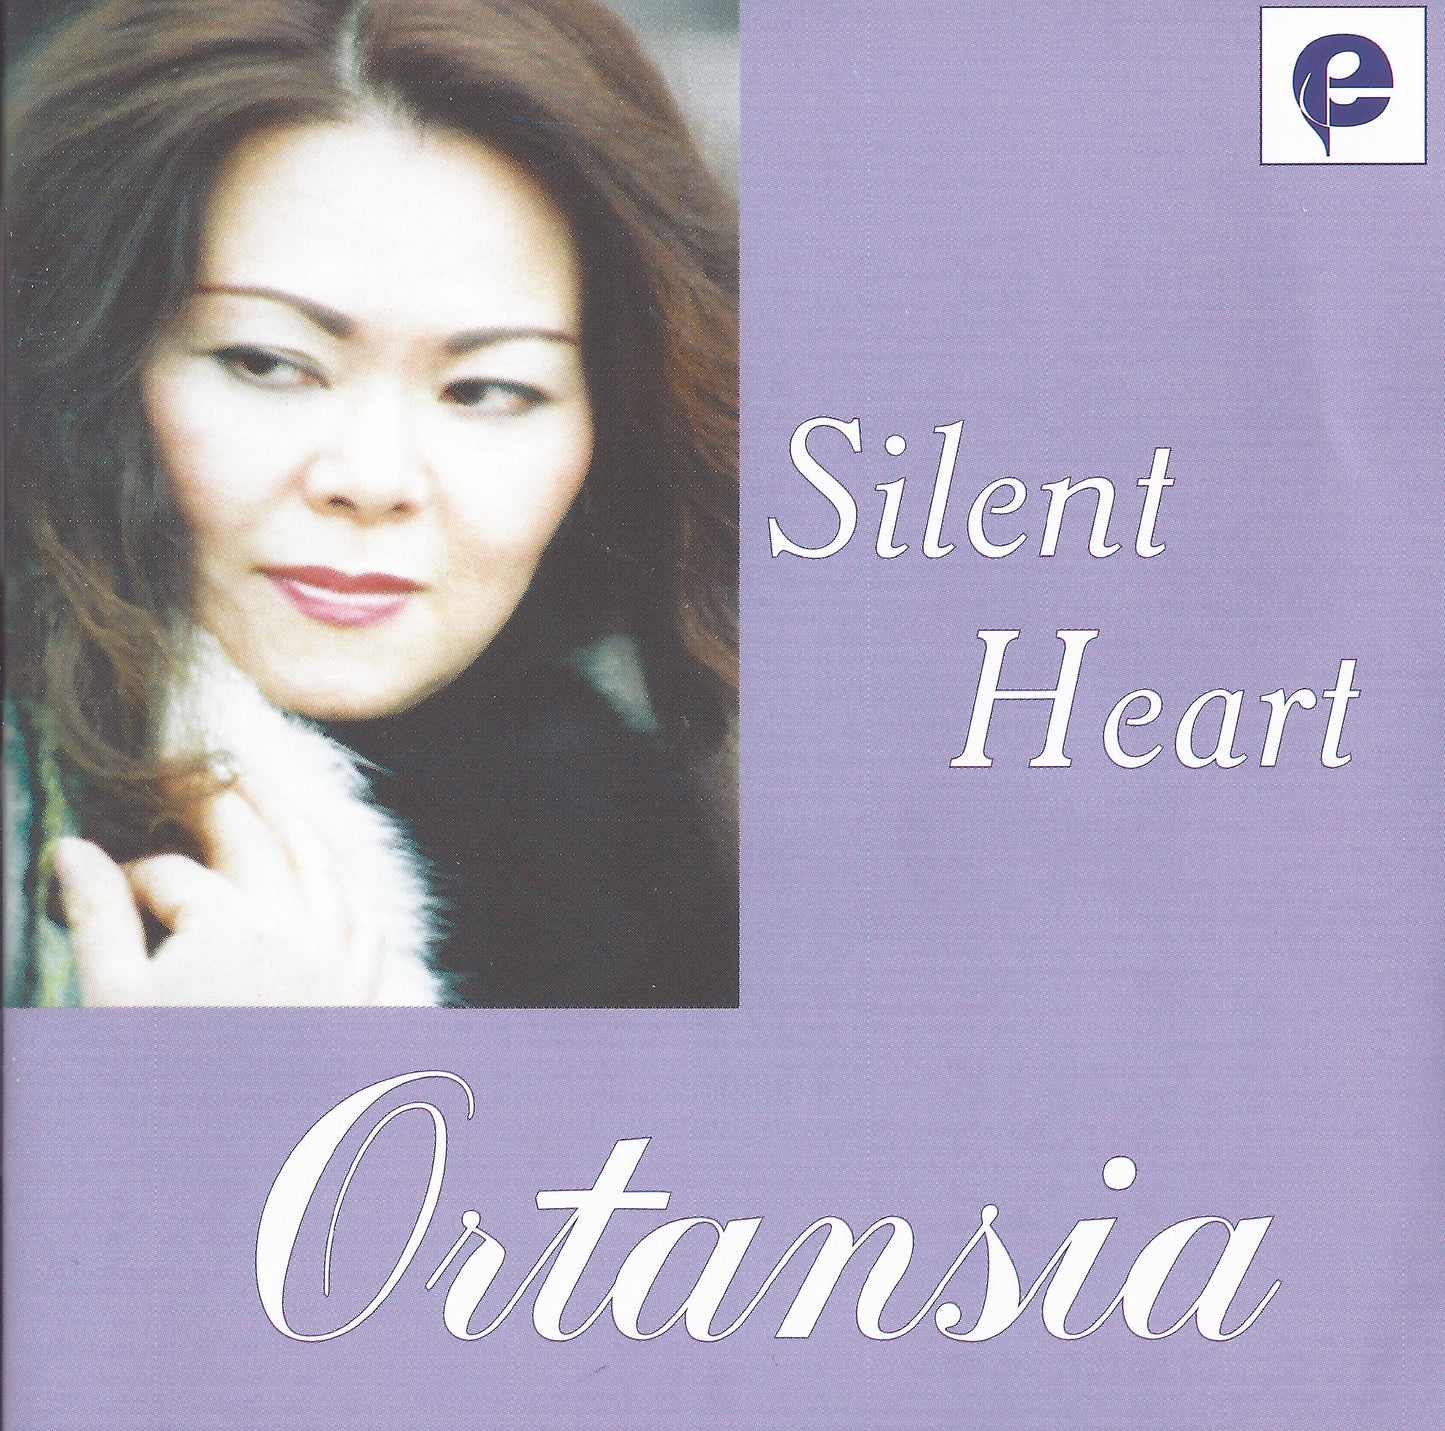 Ortansia - Silent Heart Album